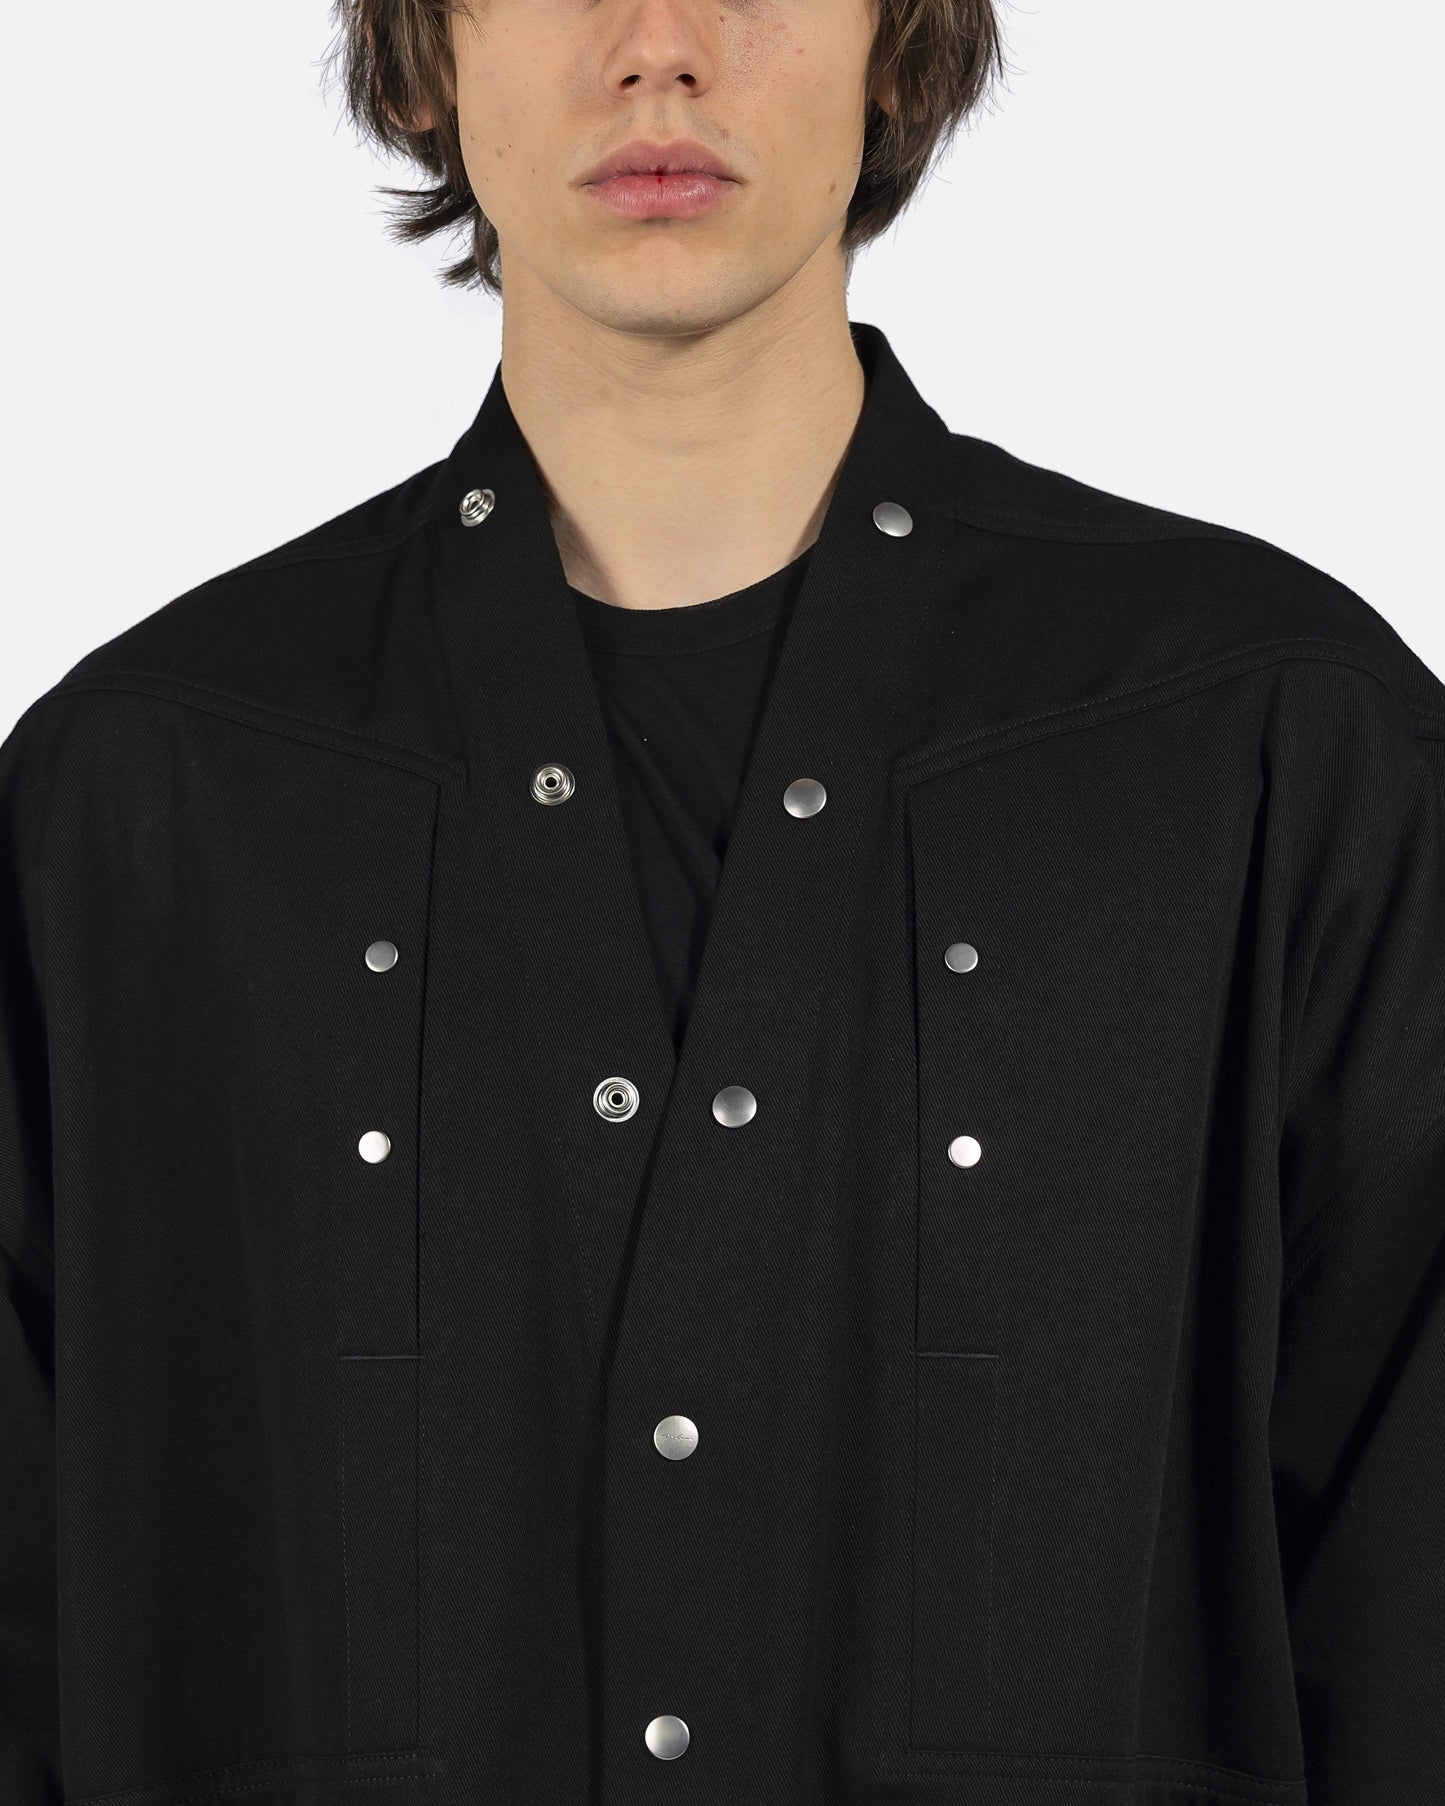 Rick Owens Men's Shirts Faun Shirt in Black